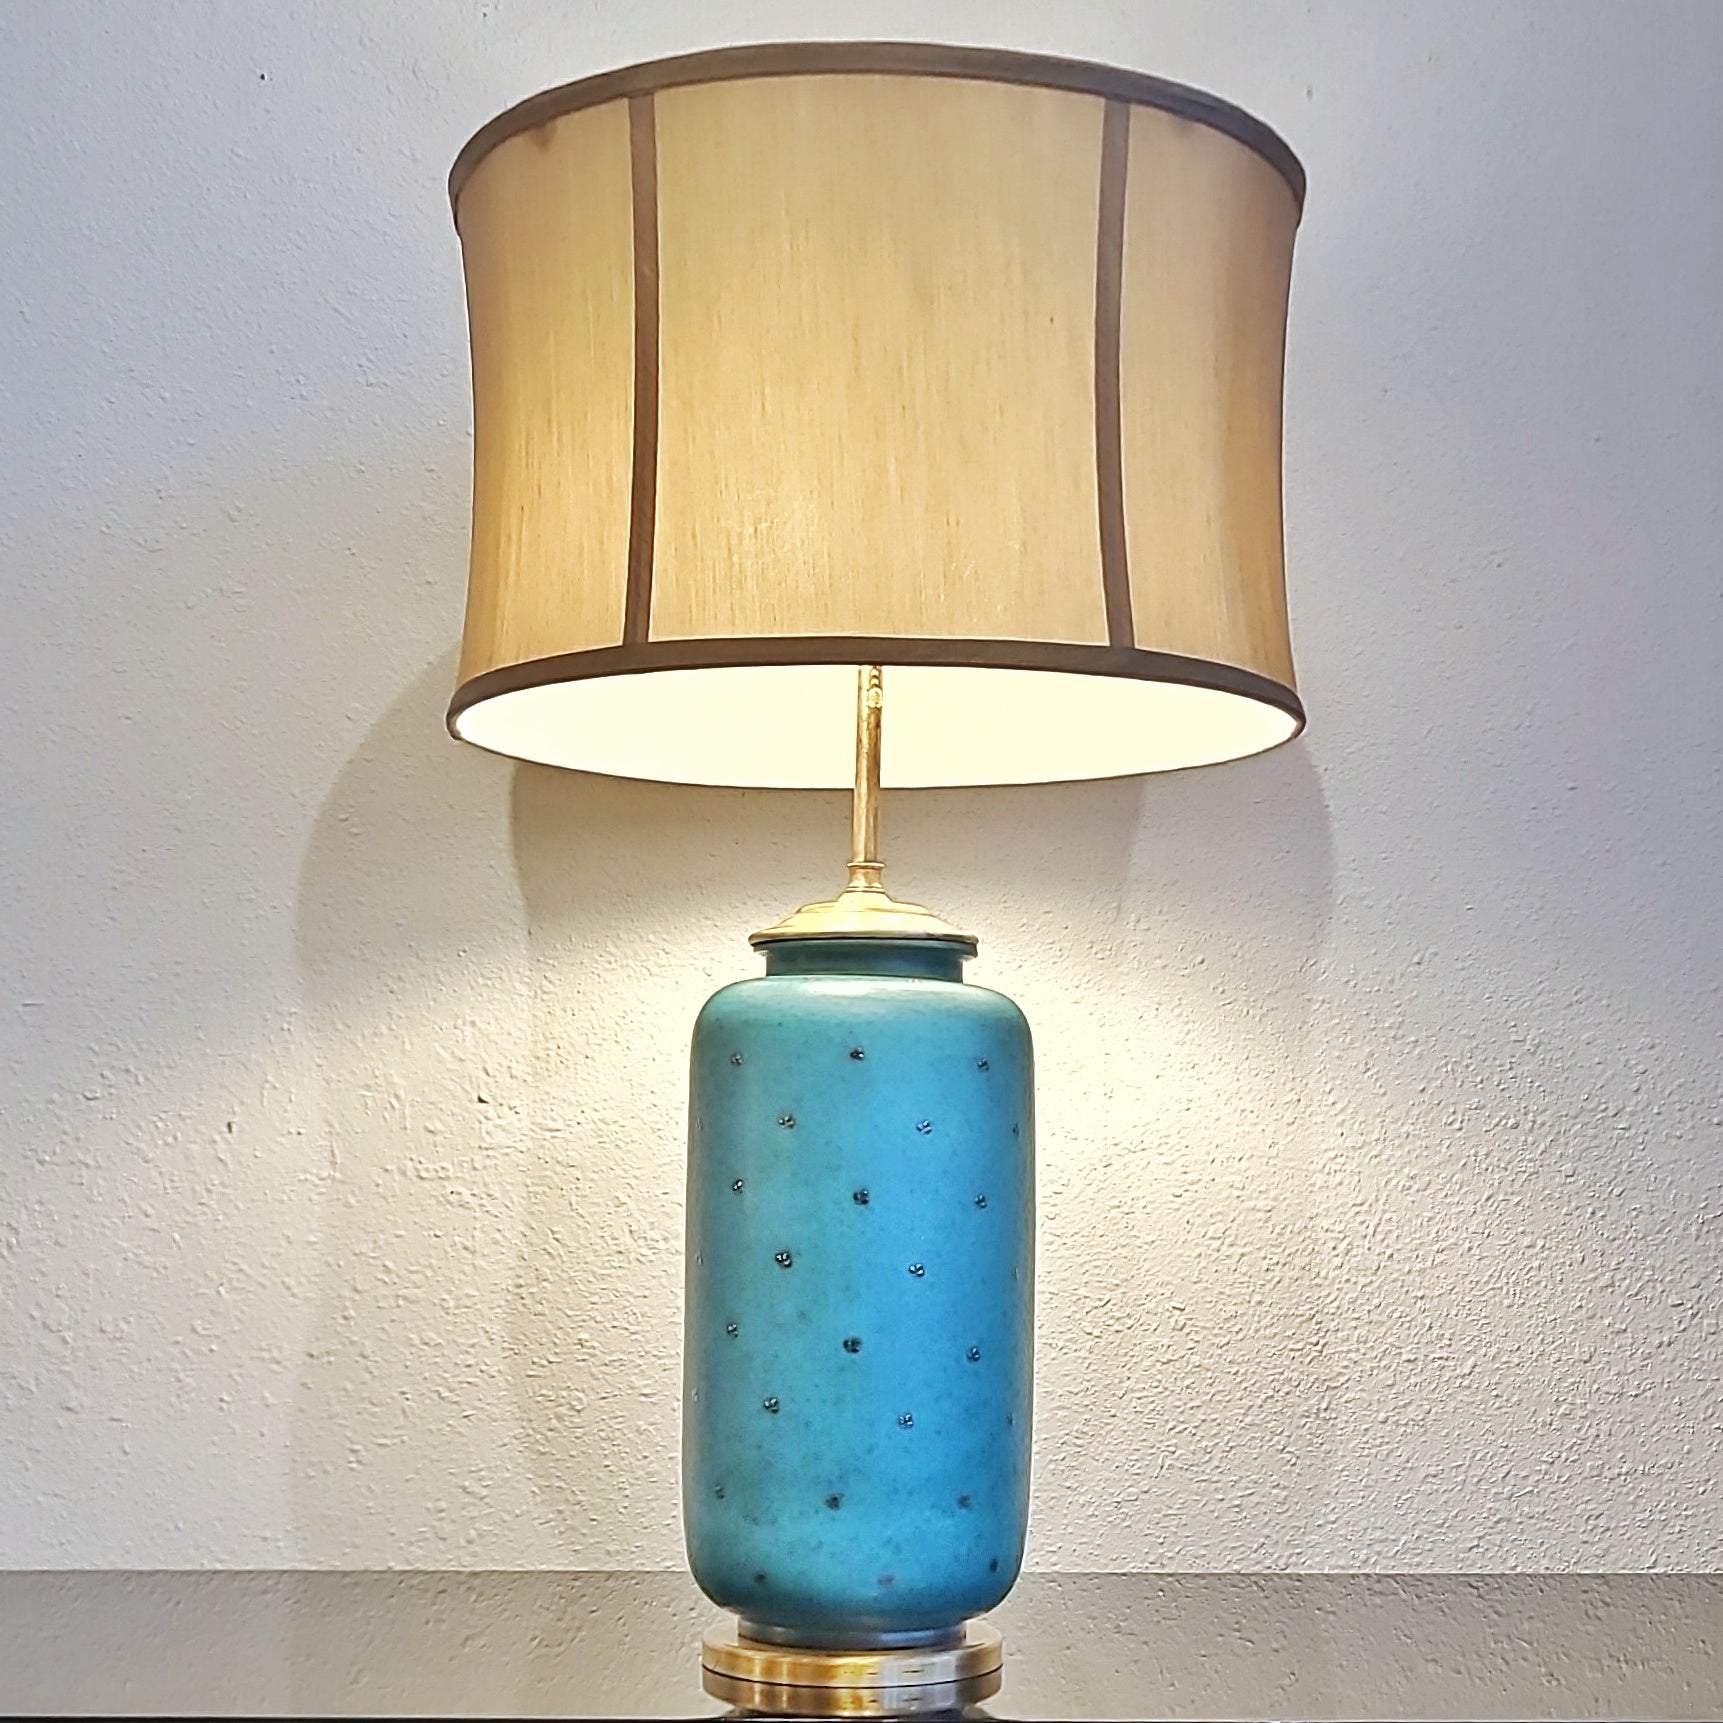 TALL 'ARGENTA' TABLE LAMP BY WILHELM KÅGE FOR GUSTAVSBERG (SWEDEN)